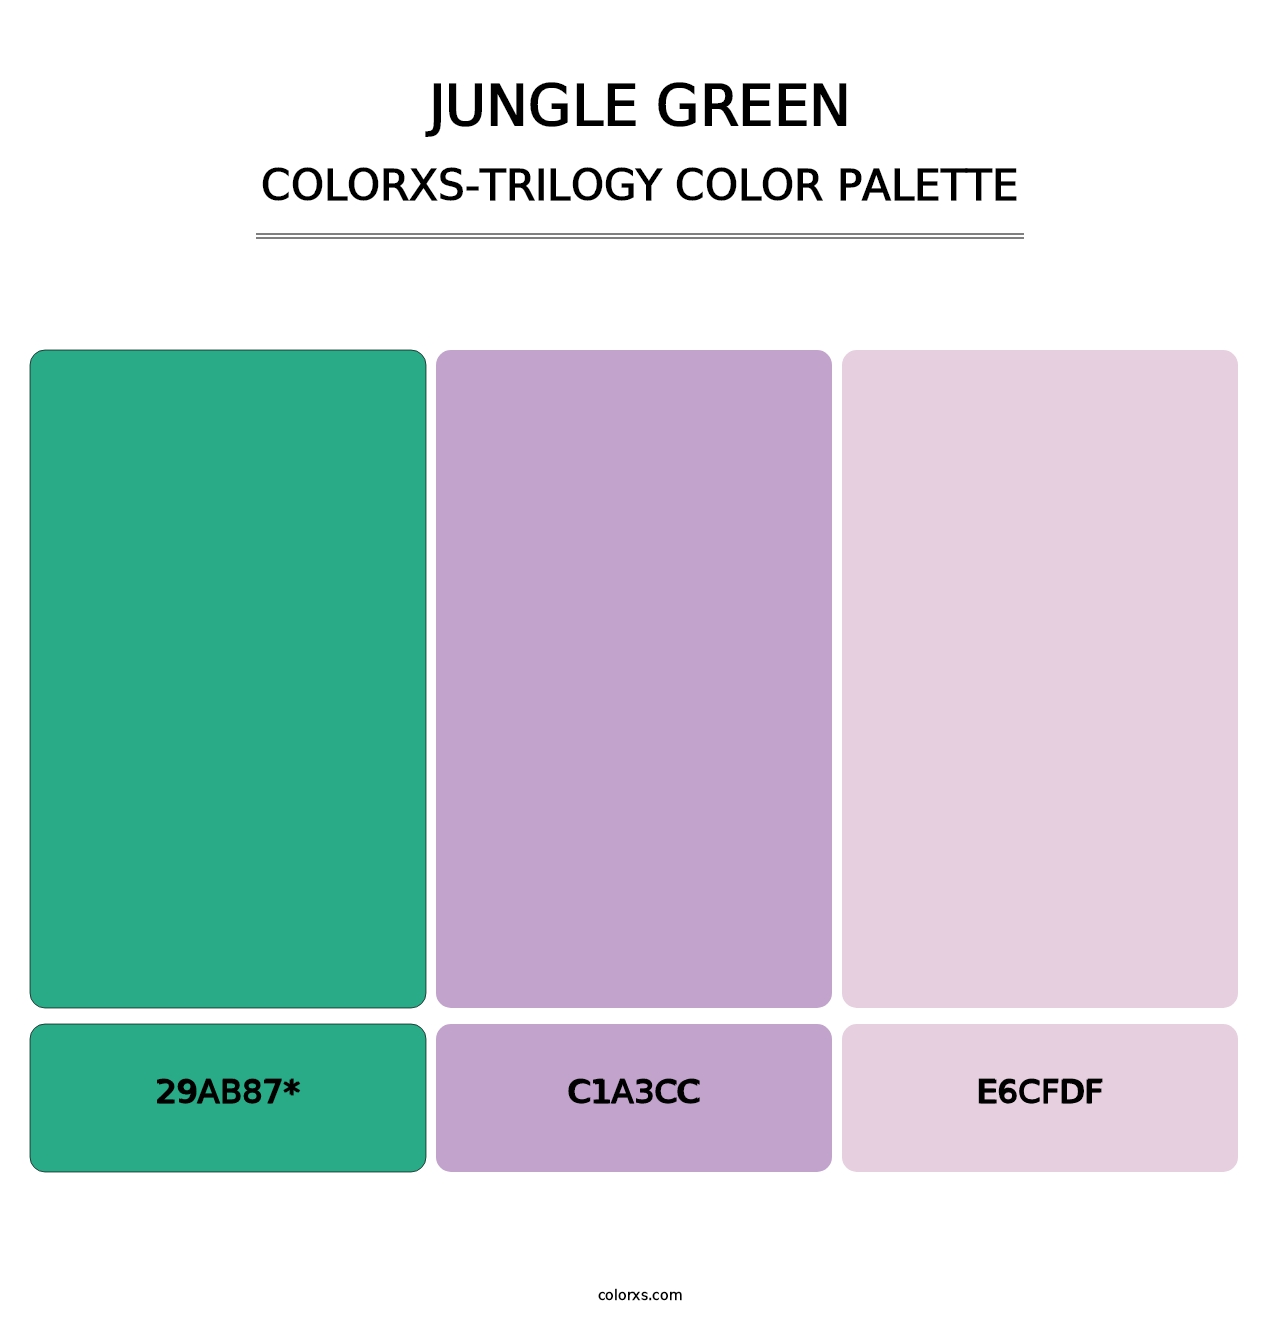 Jungle Green - Colorxs Trilogy Palette